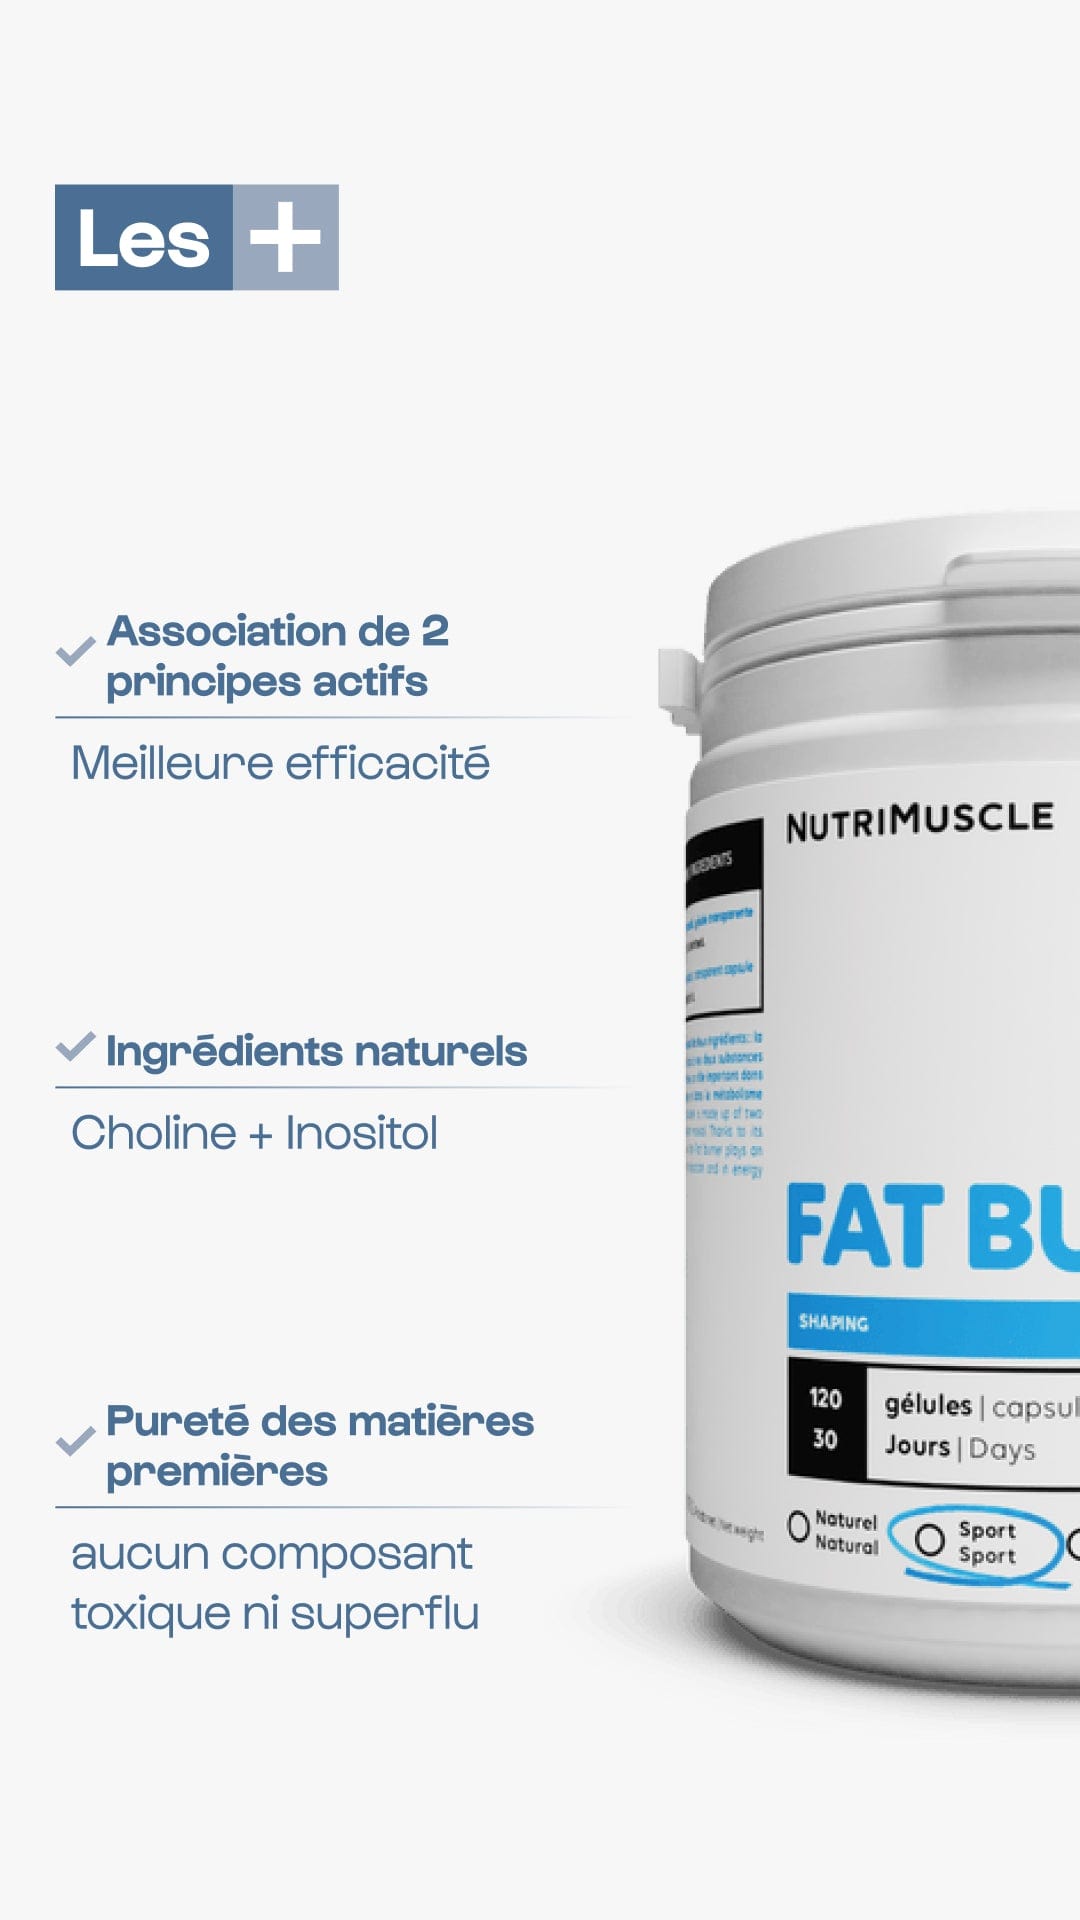 Nutrimuscle Nutriments Fat Burner